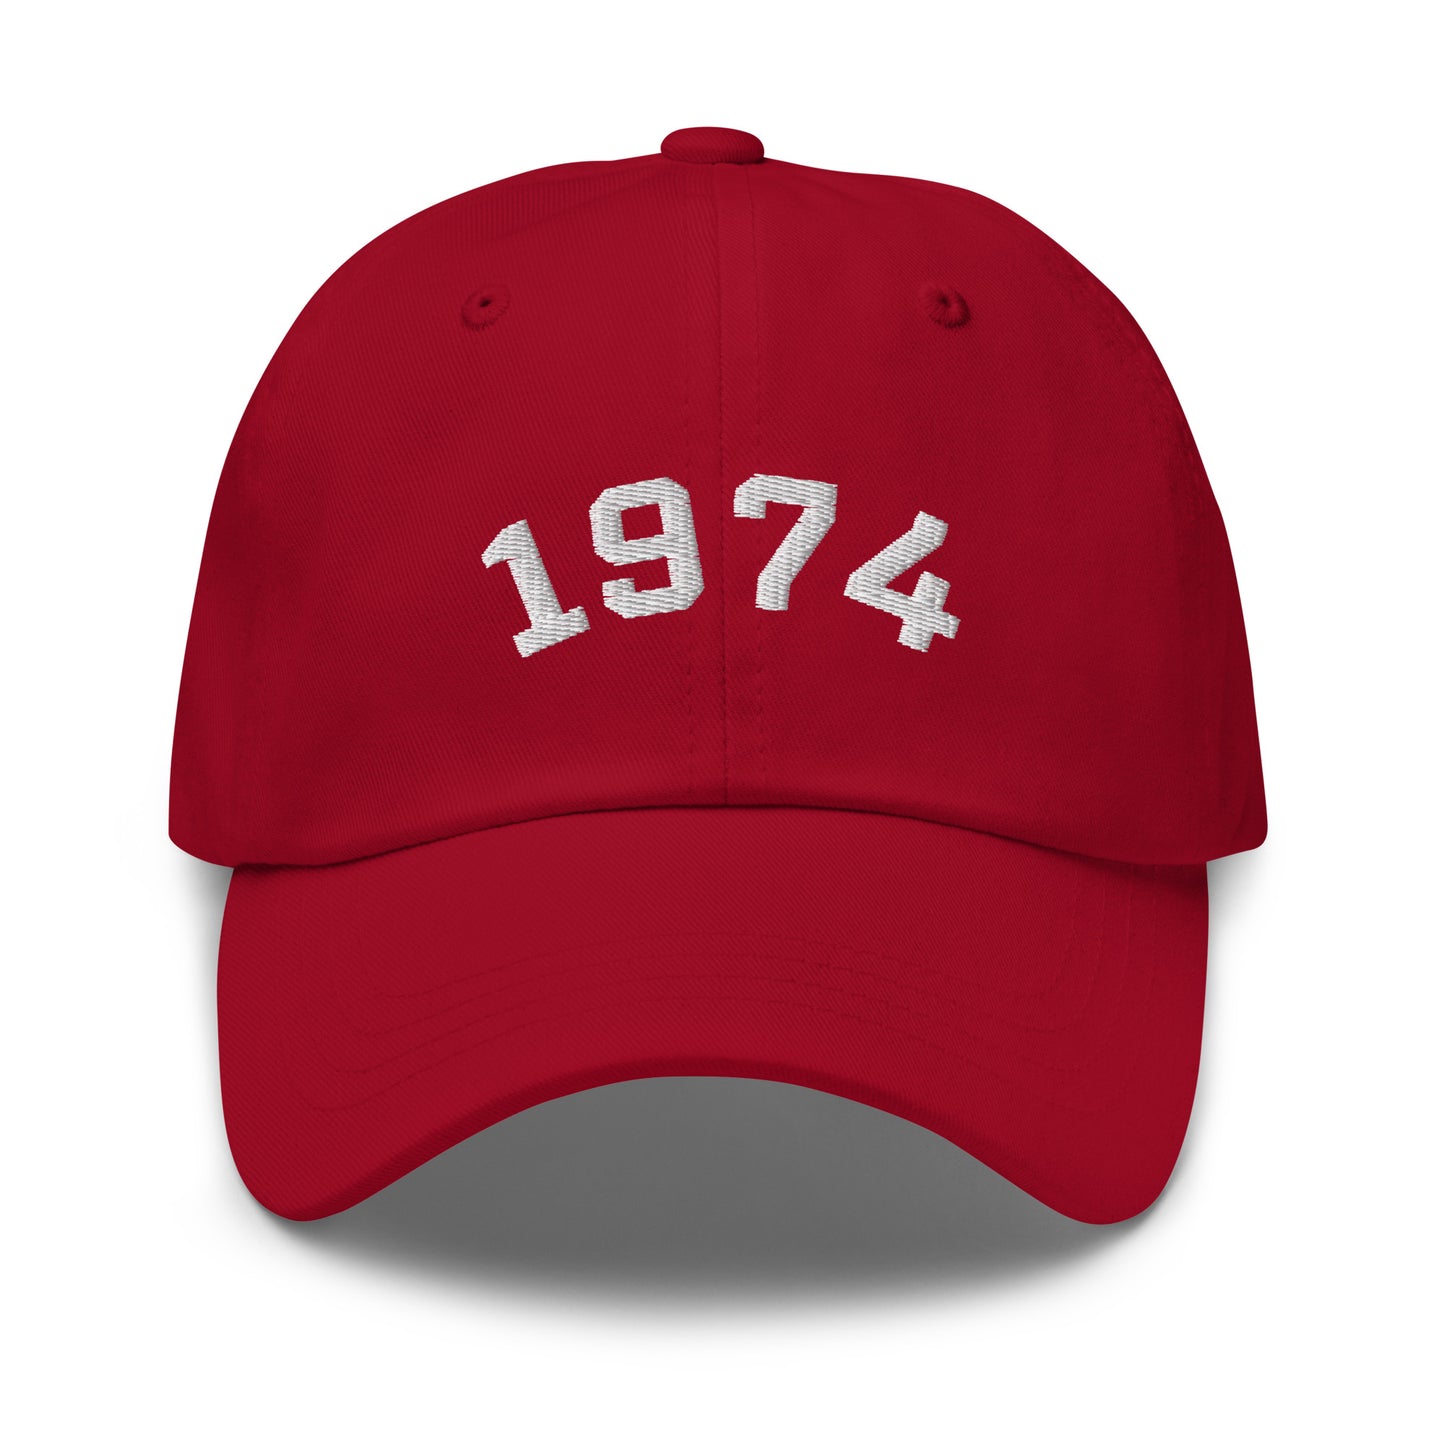 1974 Embroidered Baseball Cap